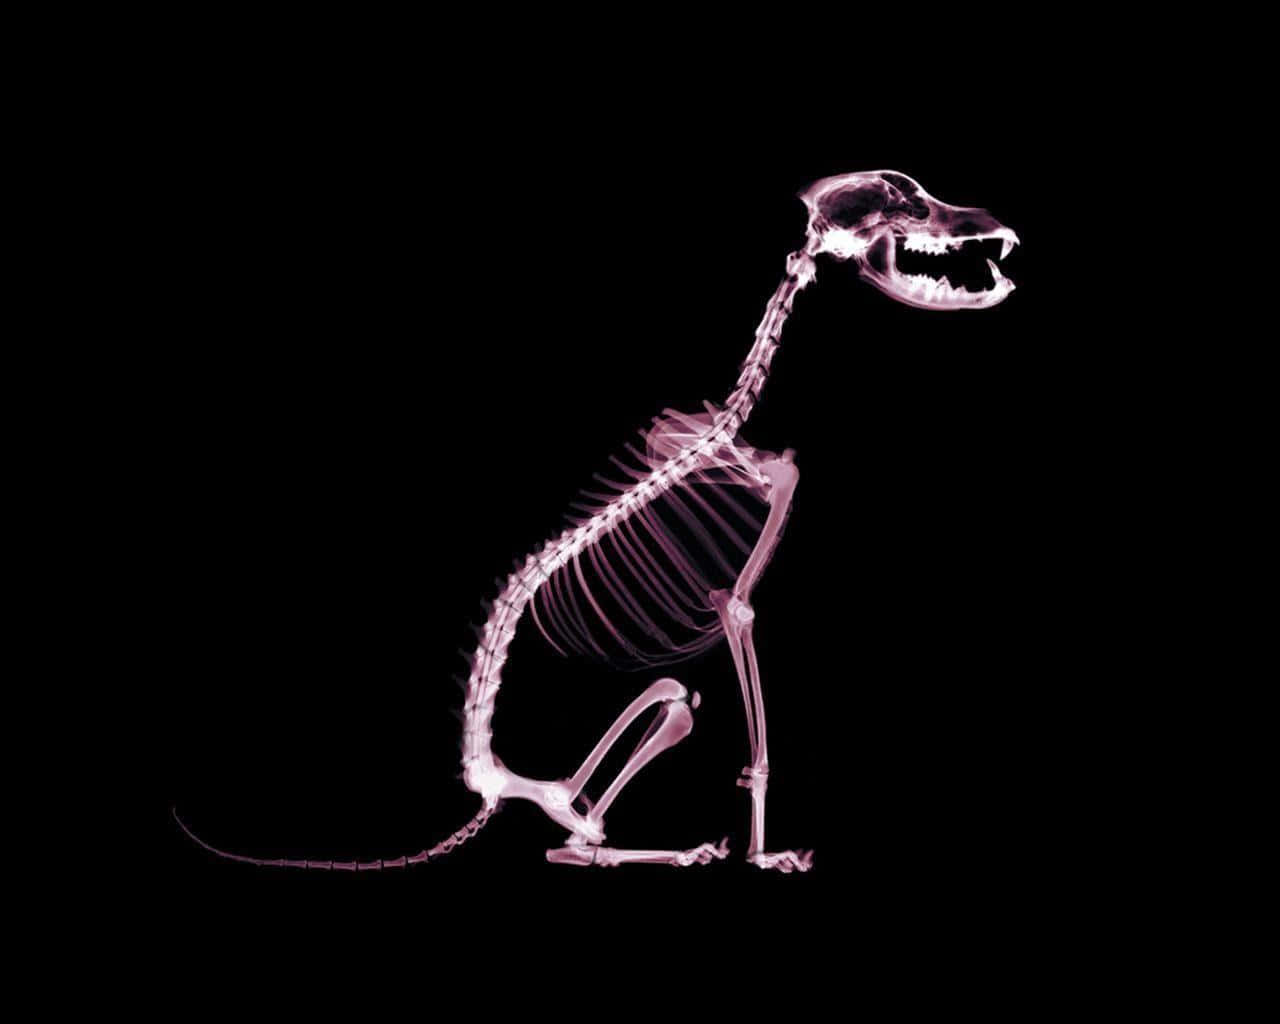 A Dog Skeleton Is Shown On A Black Background